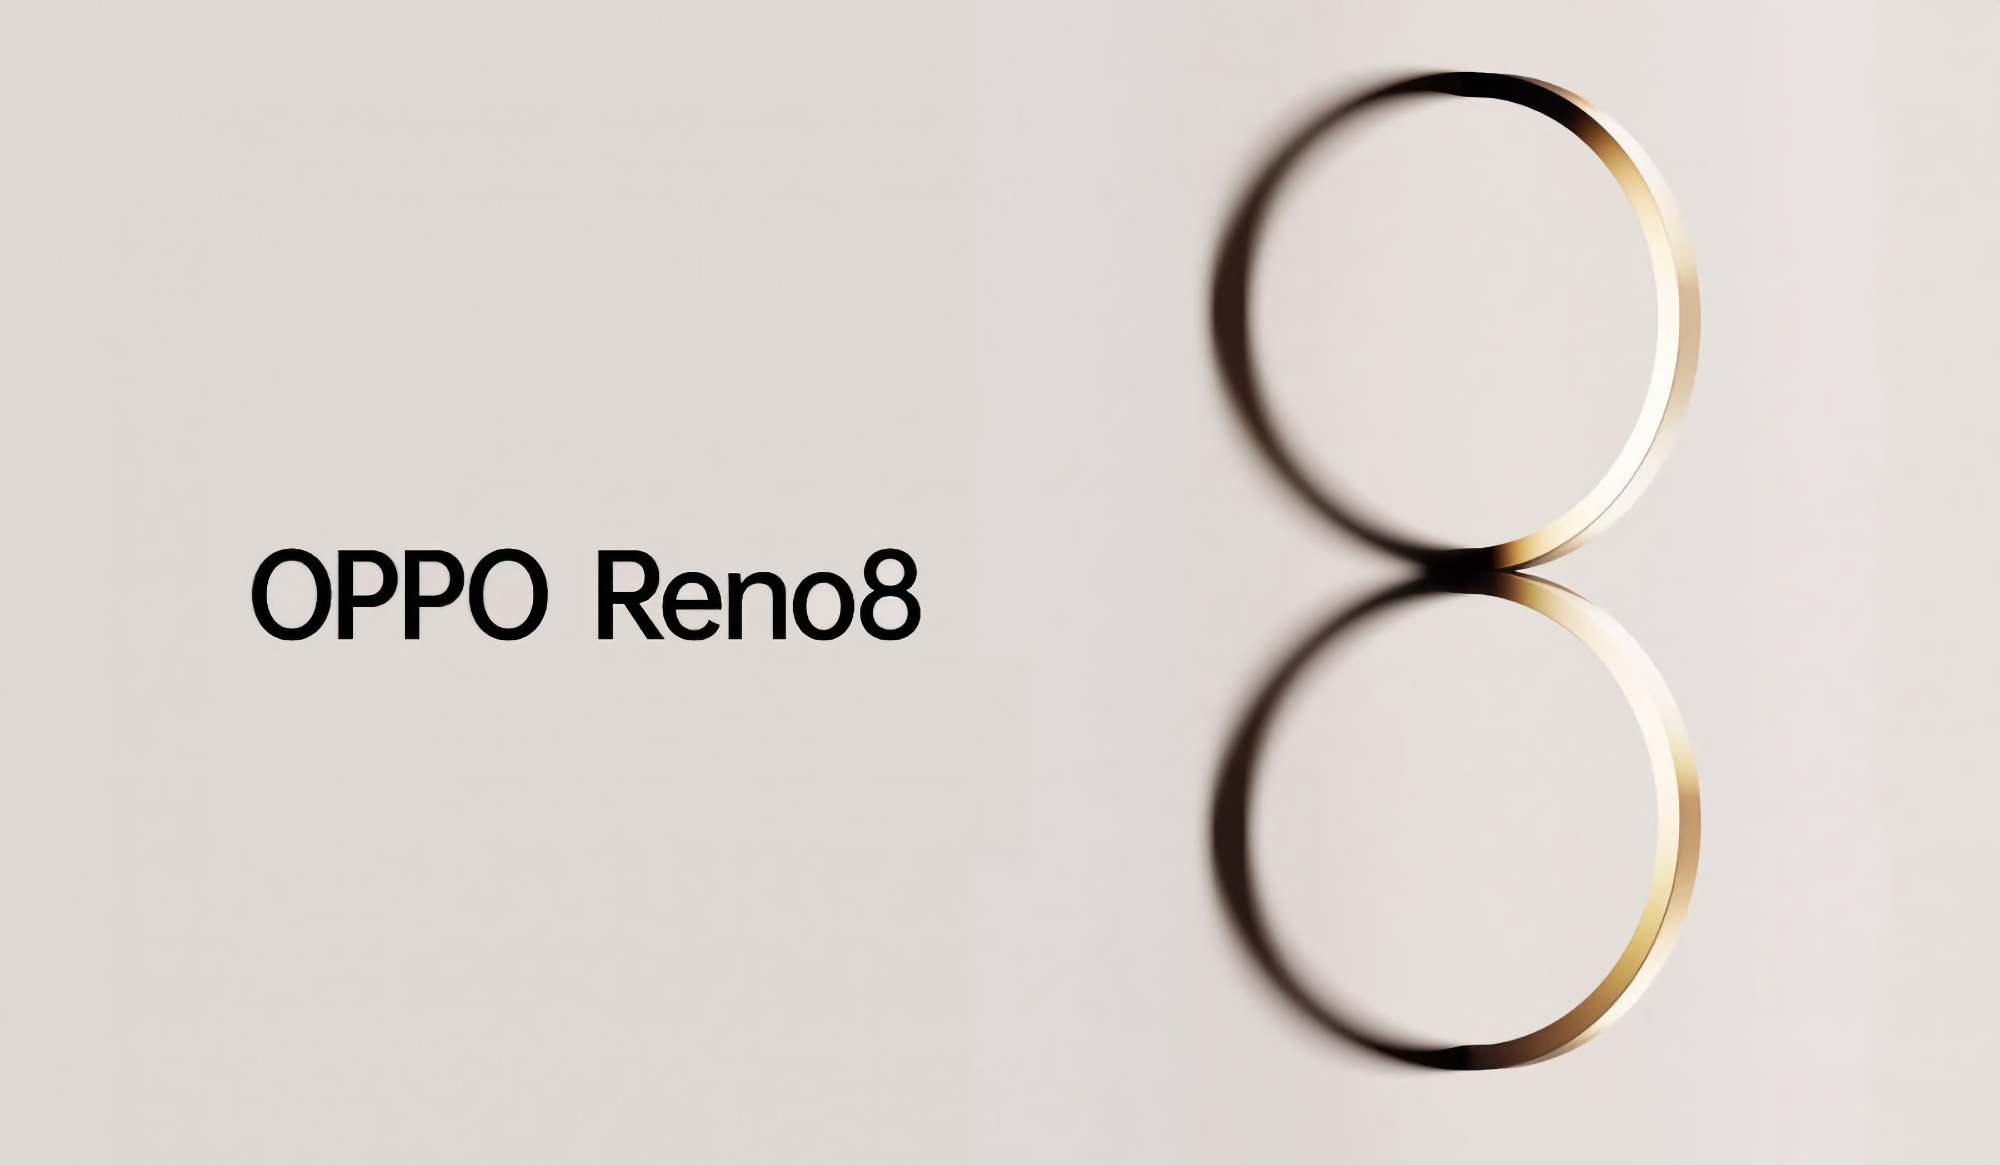 Officiel: la gamme de smartphones OPPO Reno 8 sera présentée le 23 mai